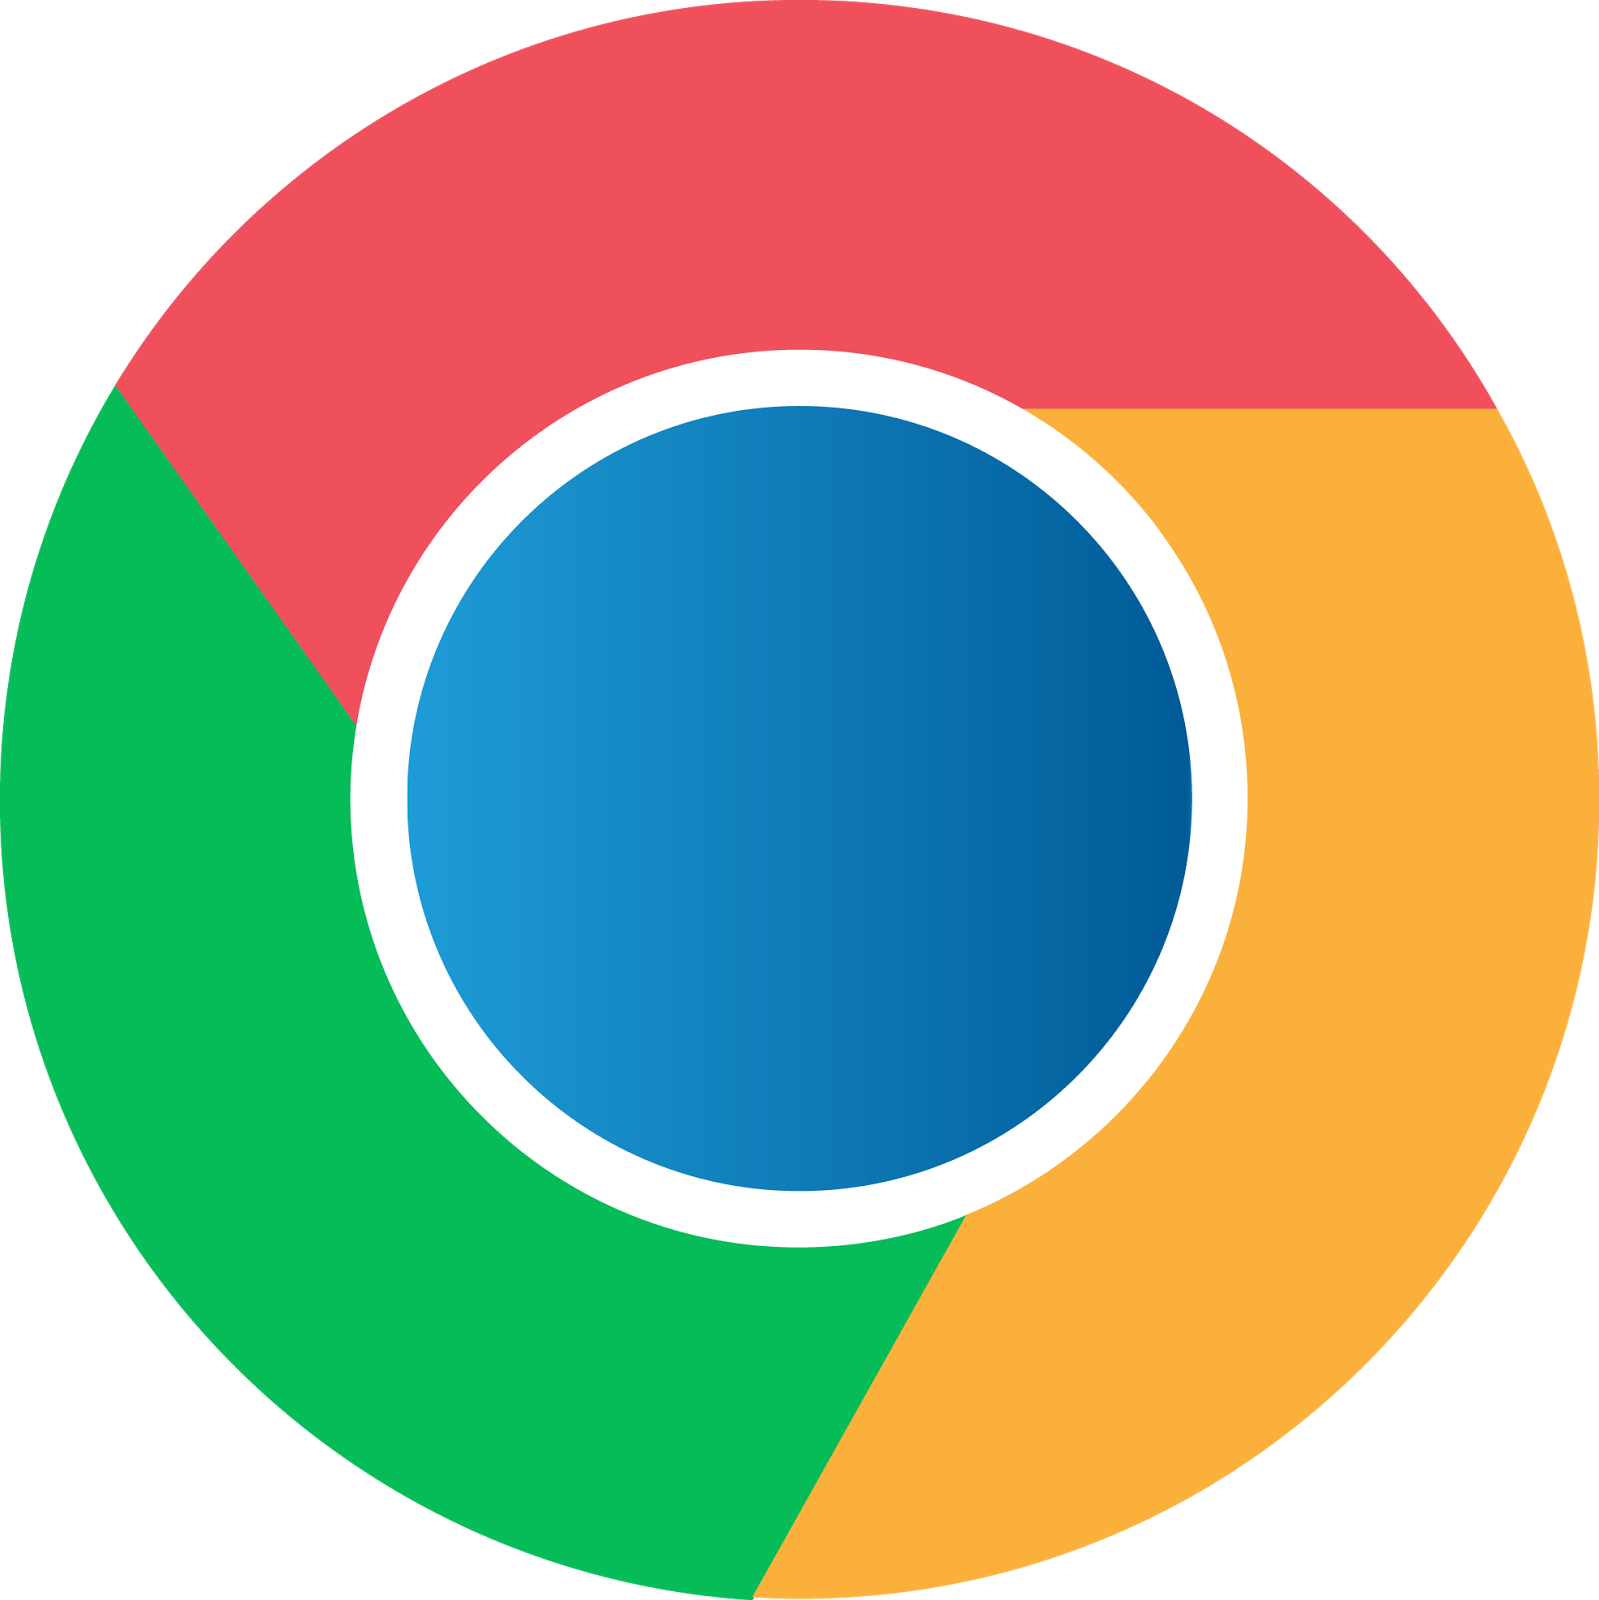 Chrome logo PNG images free download - Google Chrome Logo